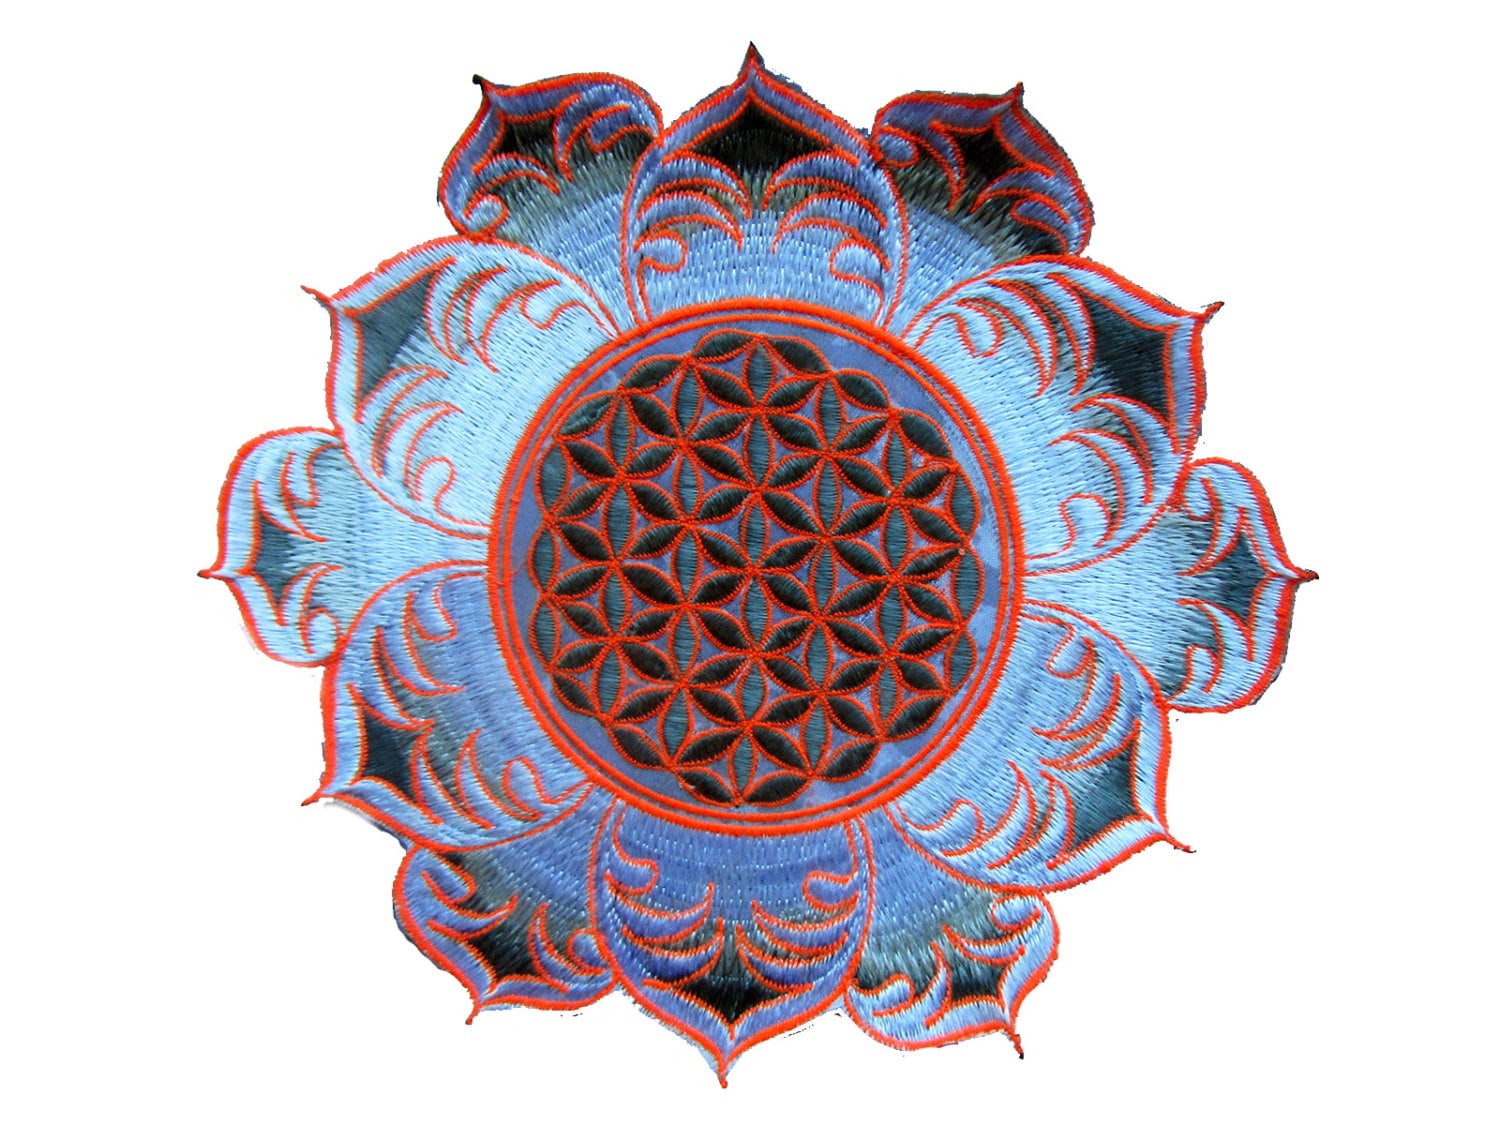 Flower of Life white mandala holy geometry psy patch sacred geometry